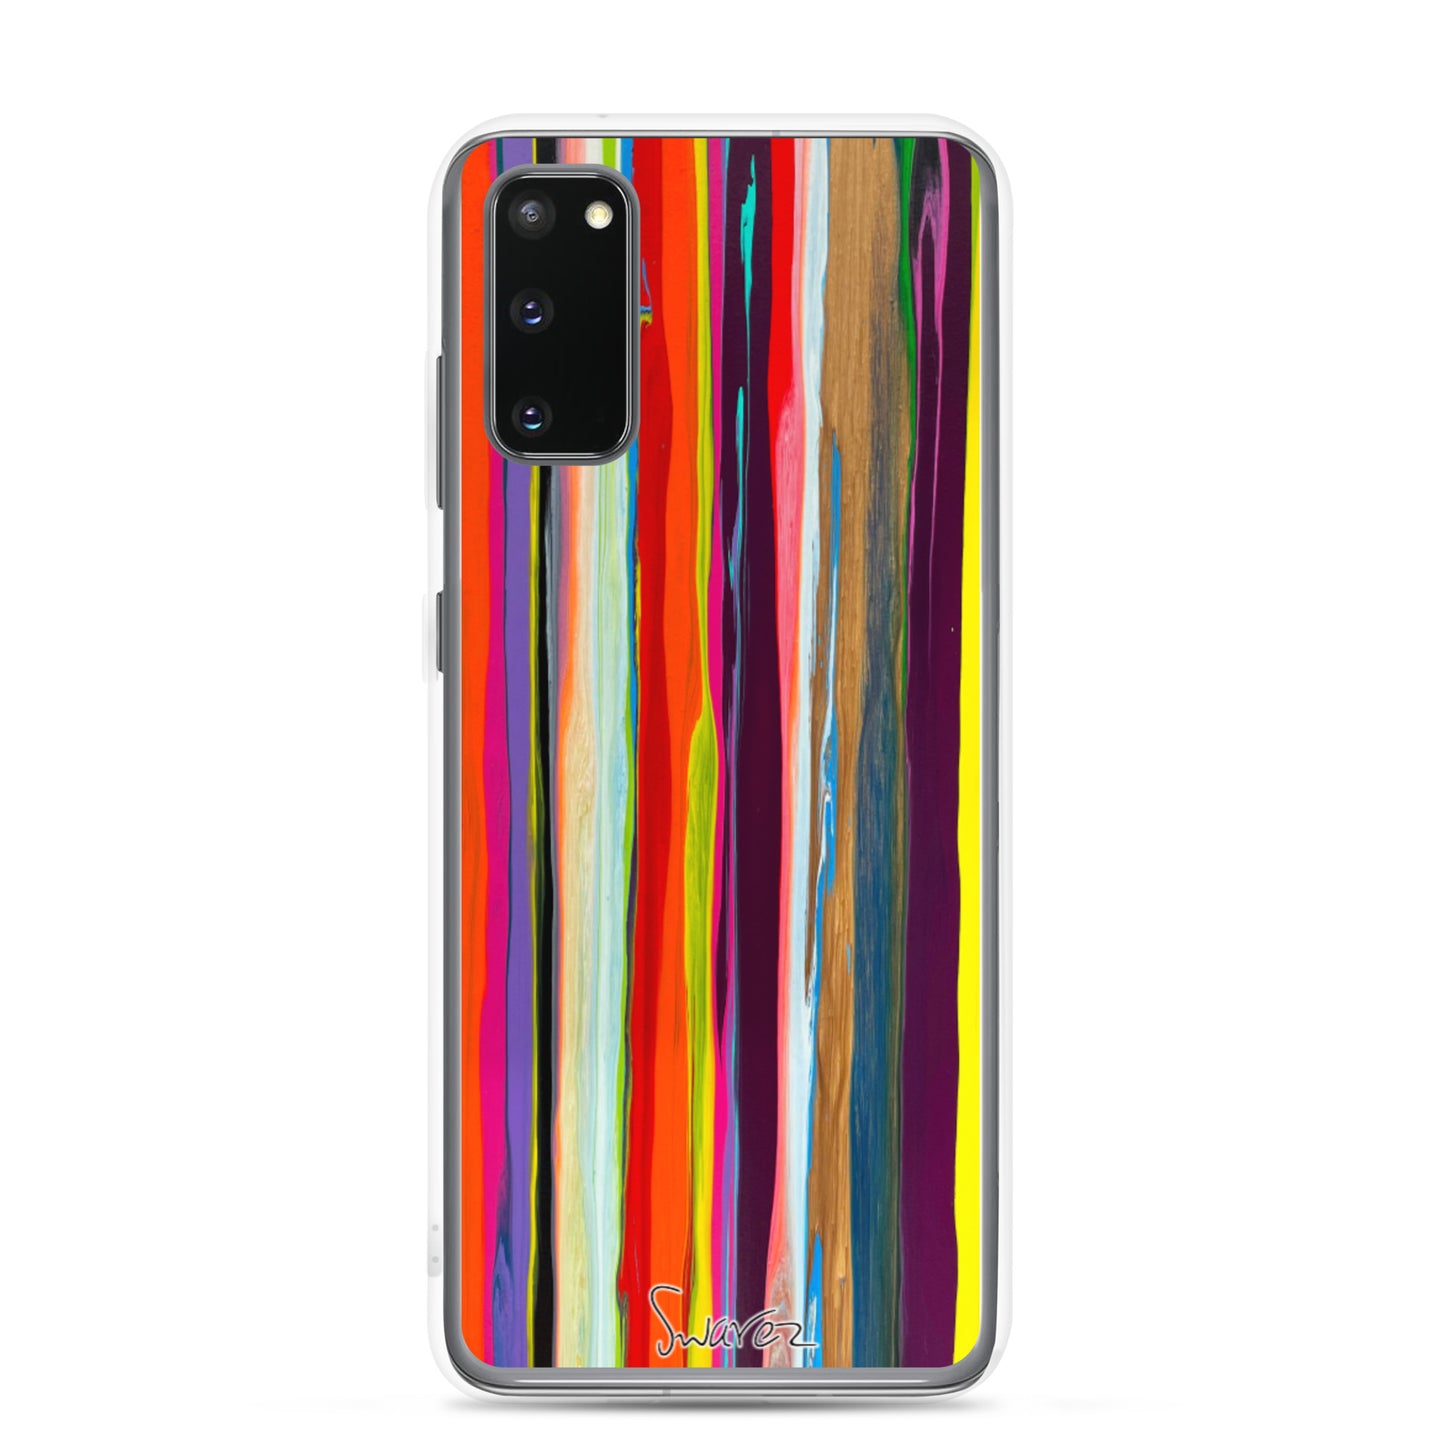 Samsung Case - Vertical Stripes